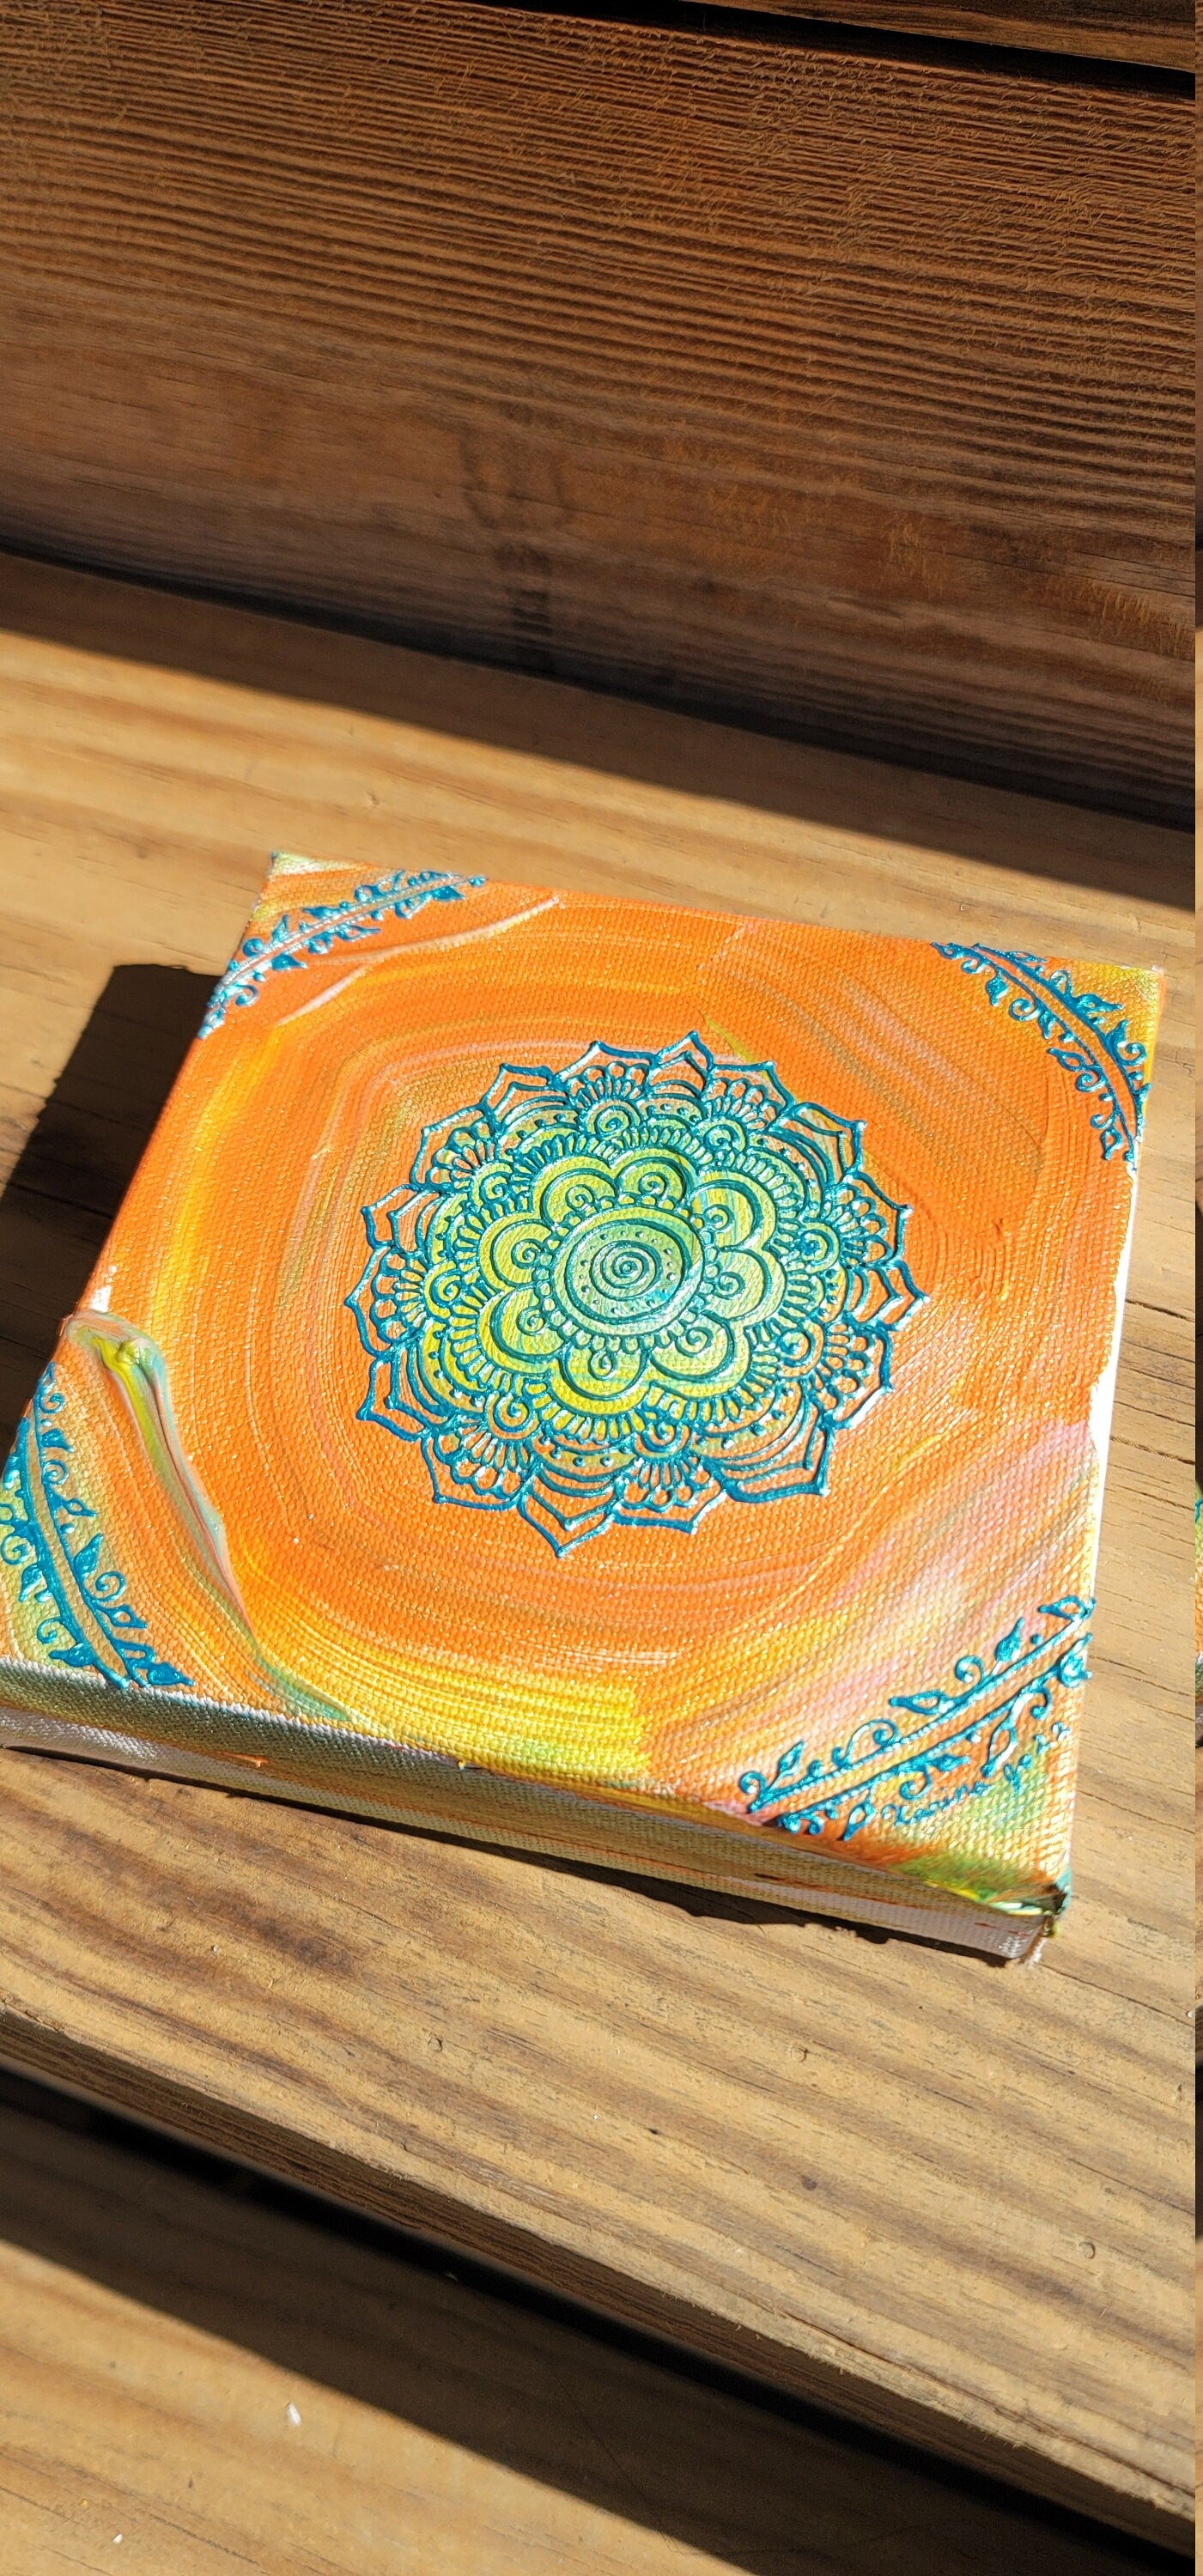 Play Original Mandala Painting | 6x6 Freehand Reiki Infused Intention Artwork